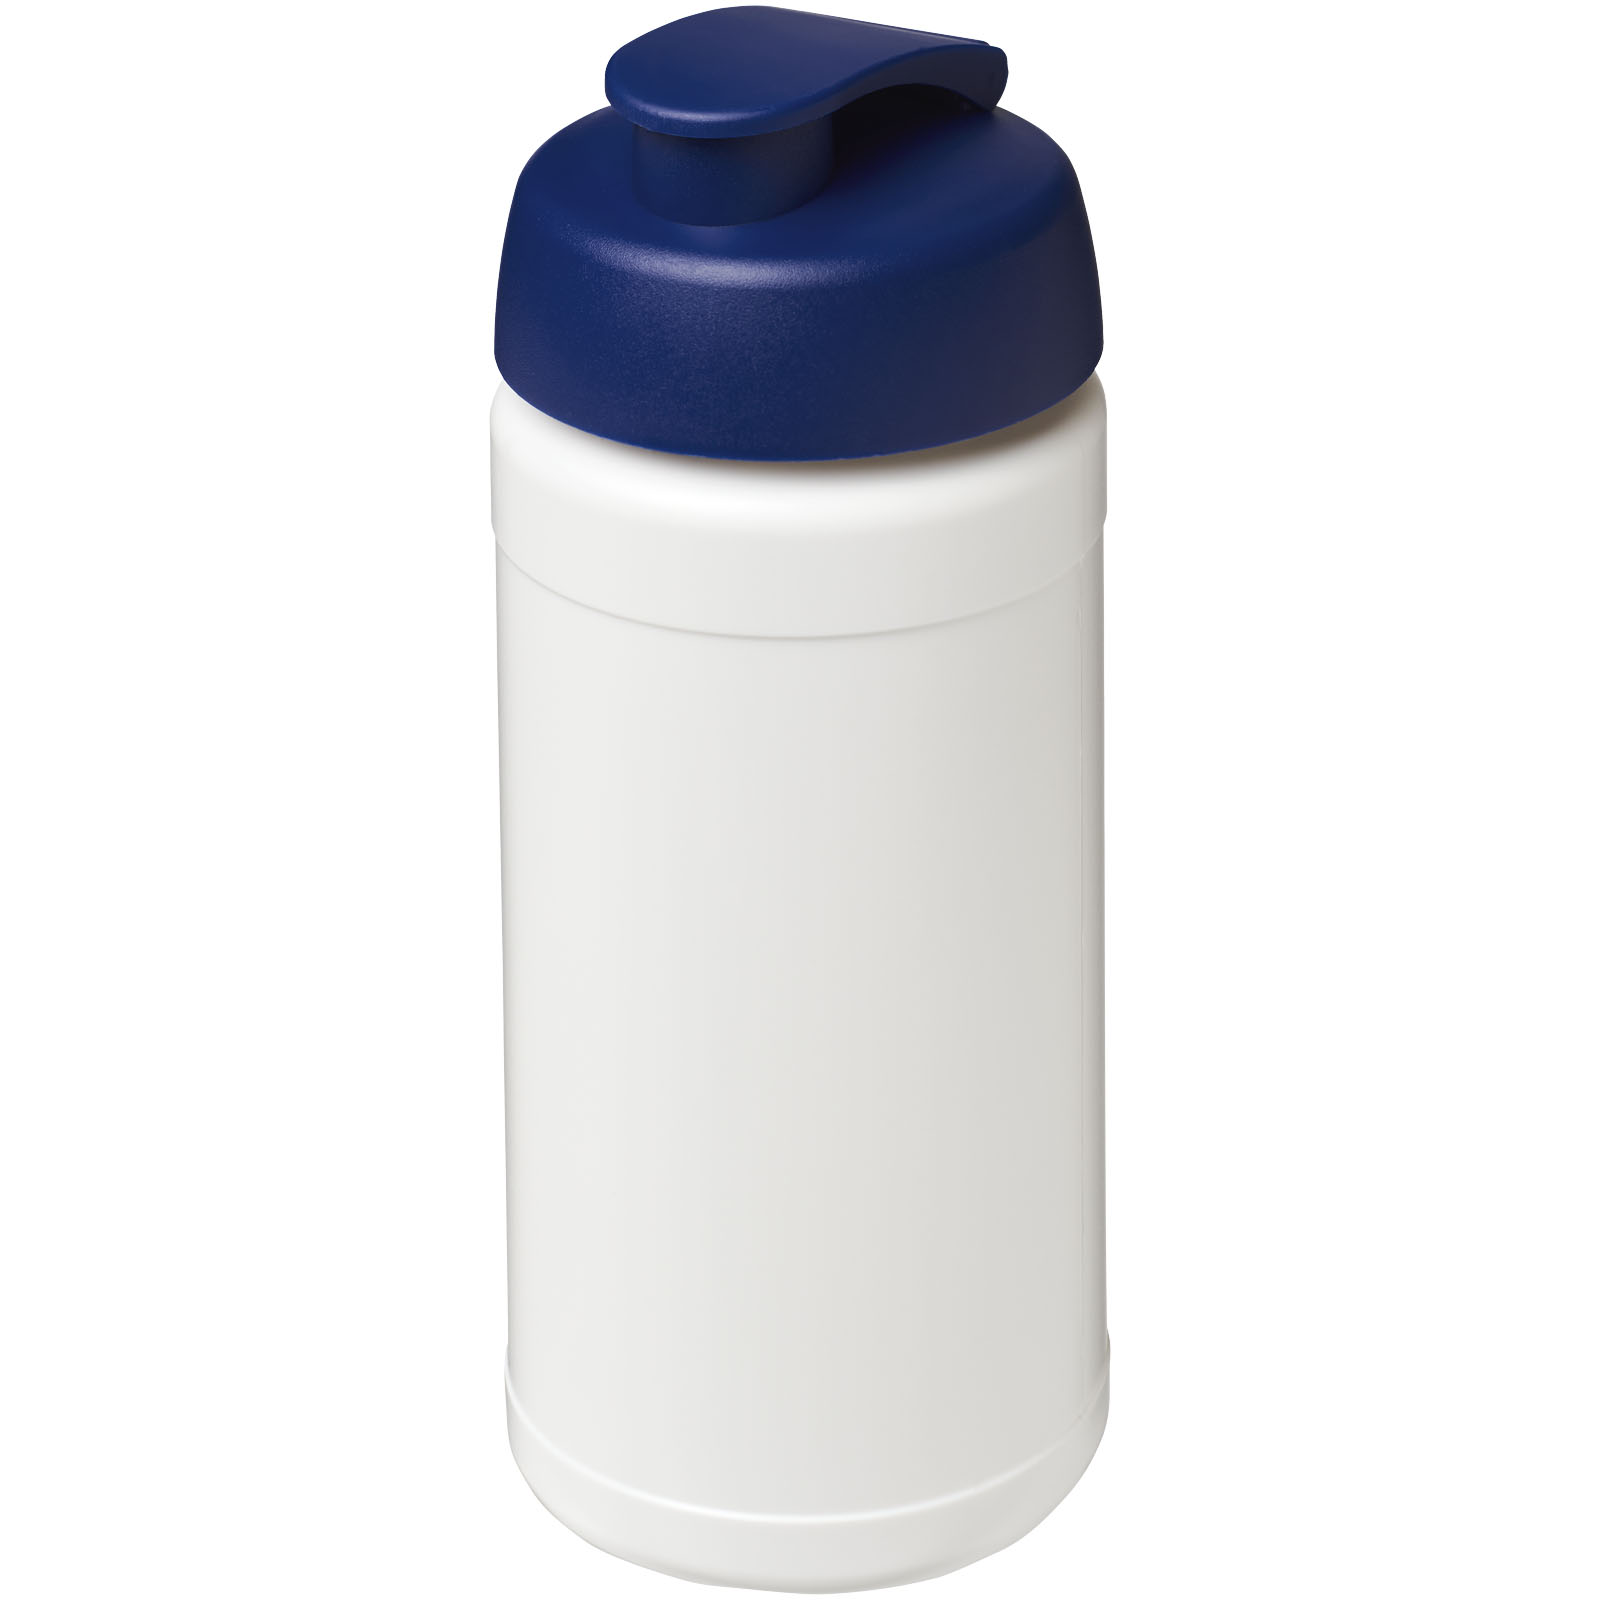 Drinkware - Baseline 500 ml recycled sport bottle with flip lid